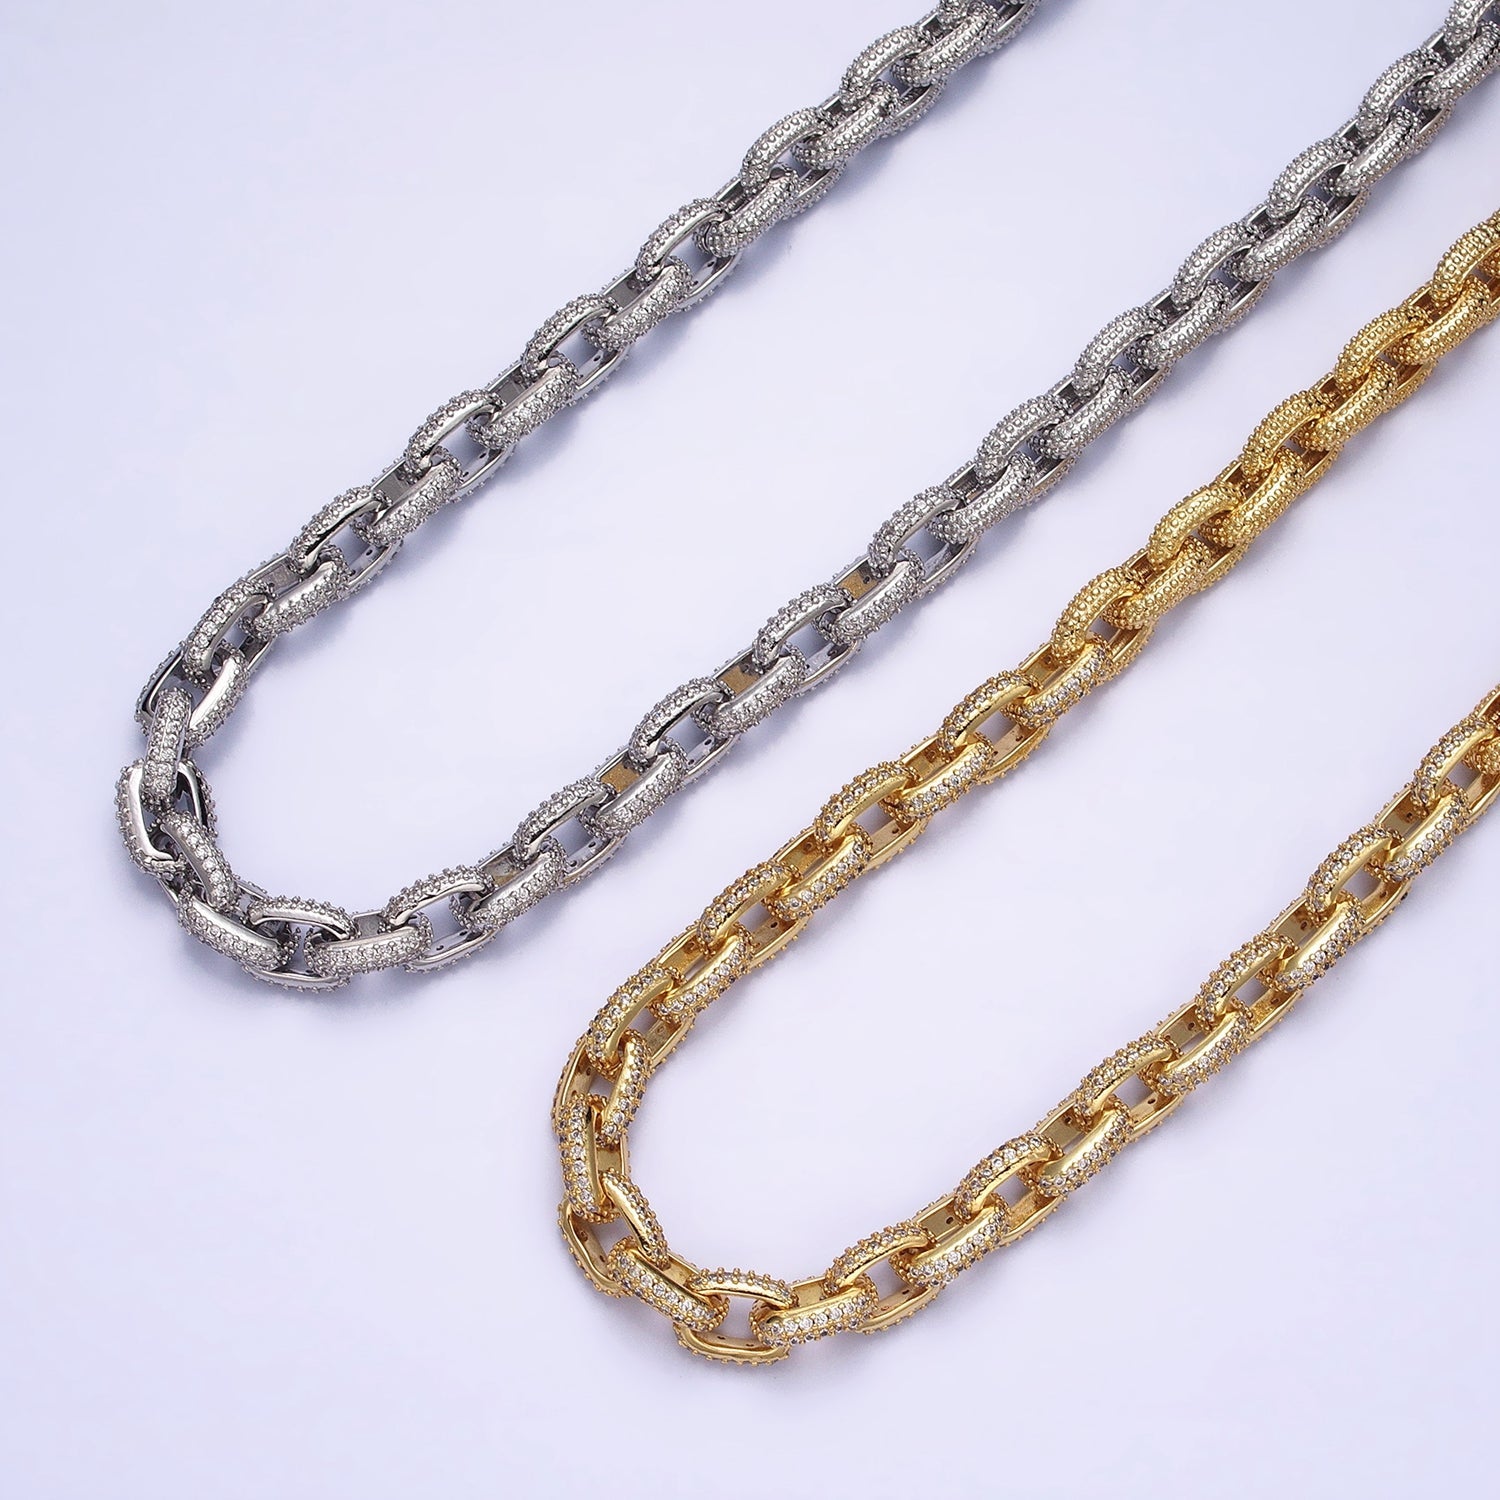 Micro Pave CZ Diamond Link Chain Necklace 24K Gold Filled Necklace Statement Jewelry WA1694 WA1695 - DLUXCA